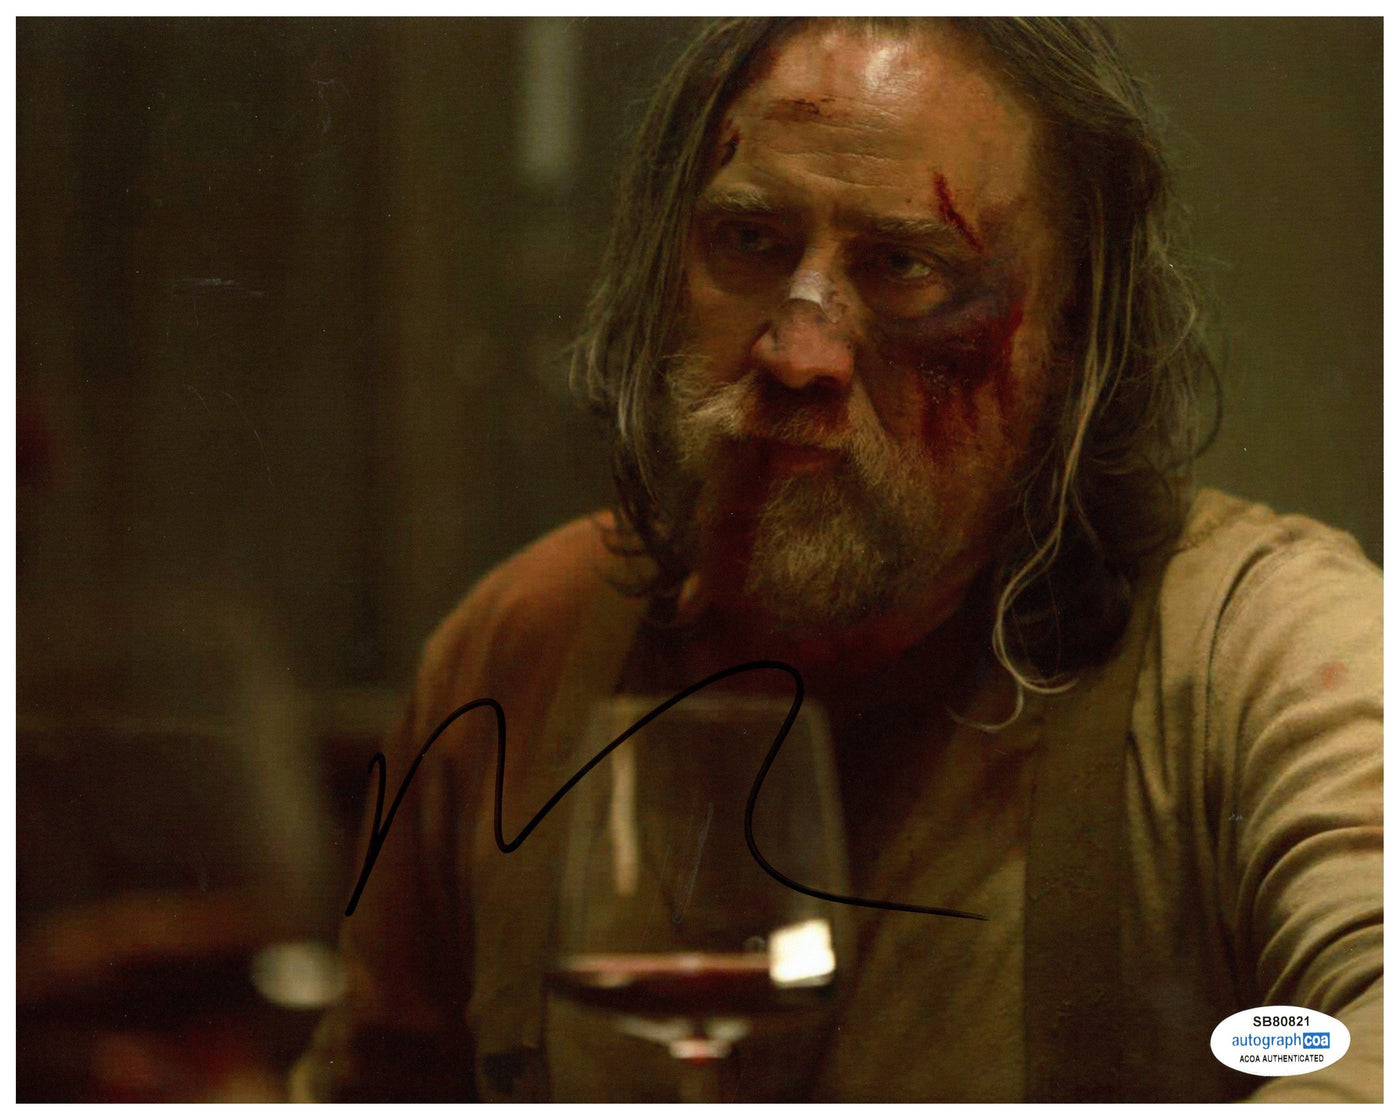 Nicolas Cage Signed 8x10 Photo Pig Authentic Autographed ACOA